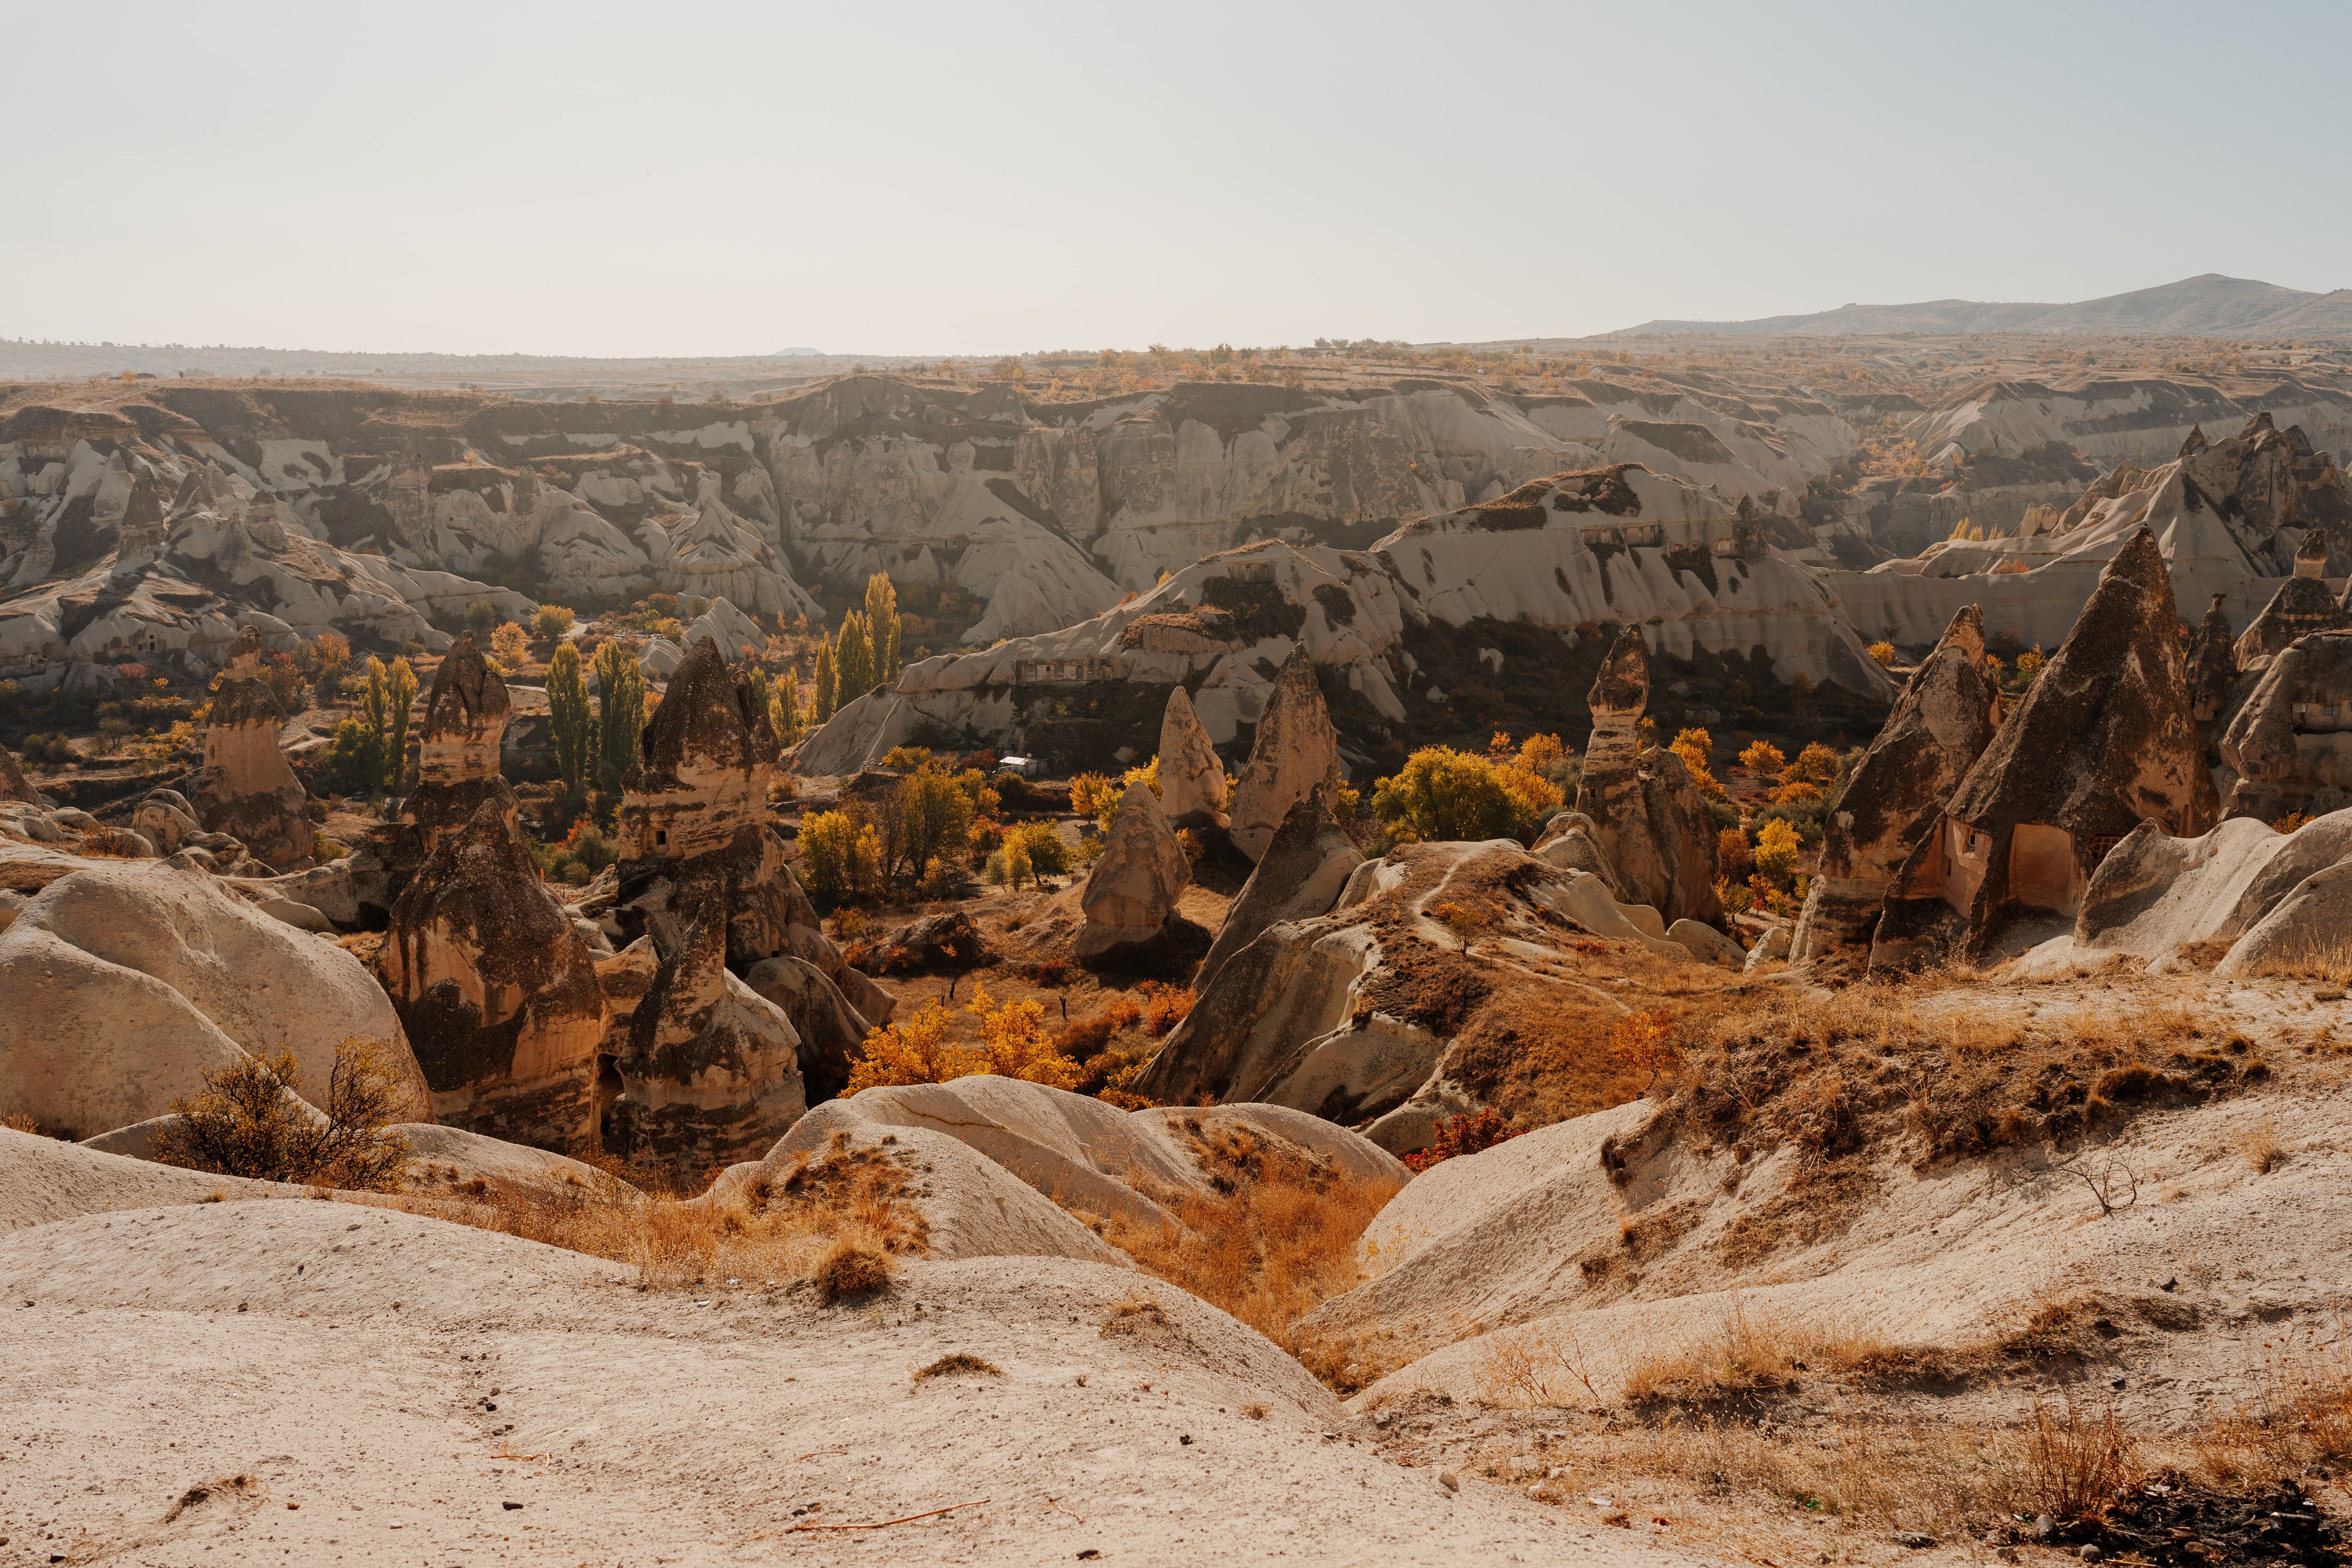 Cappadocia Red (North) Tour